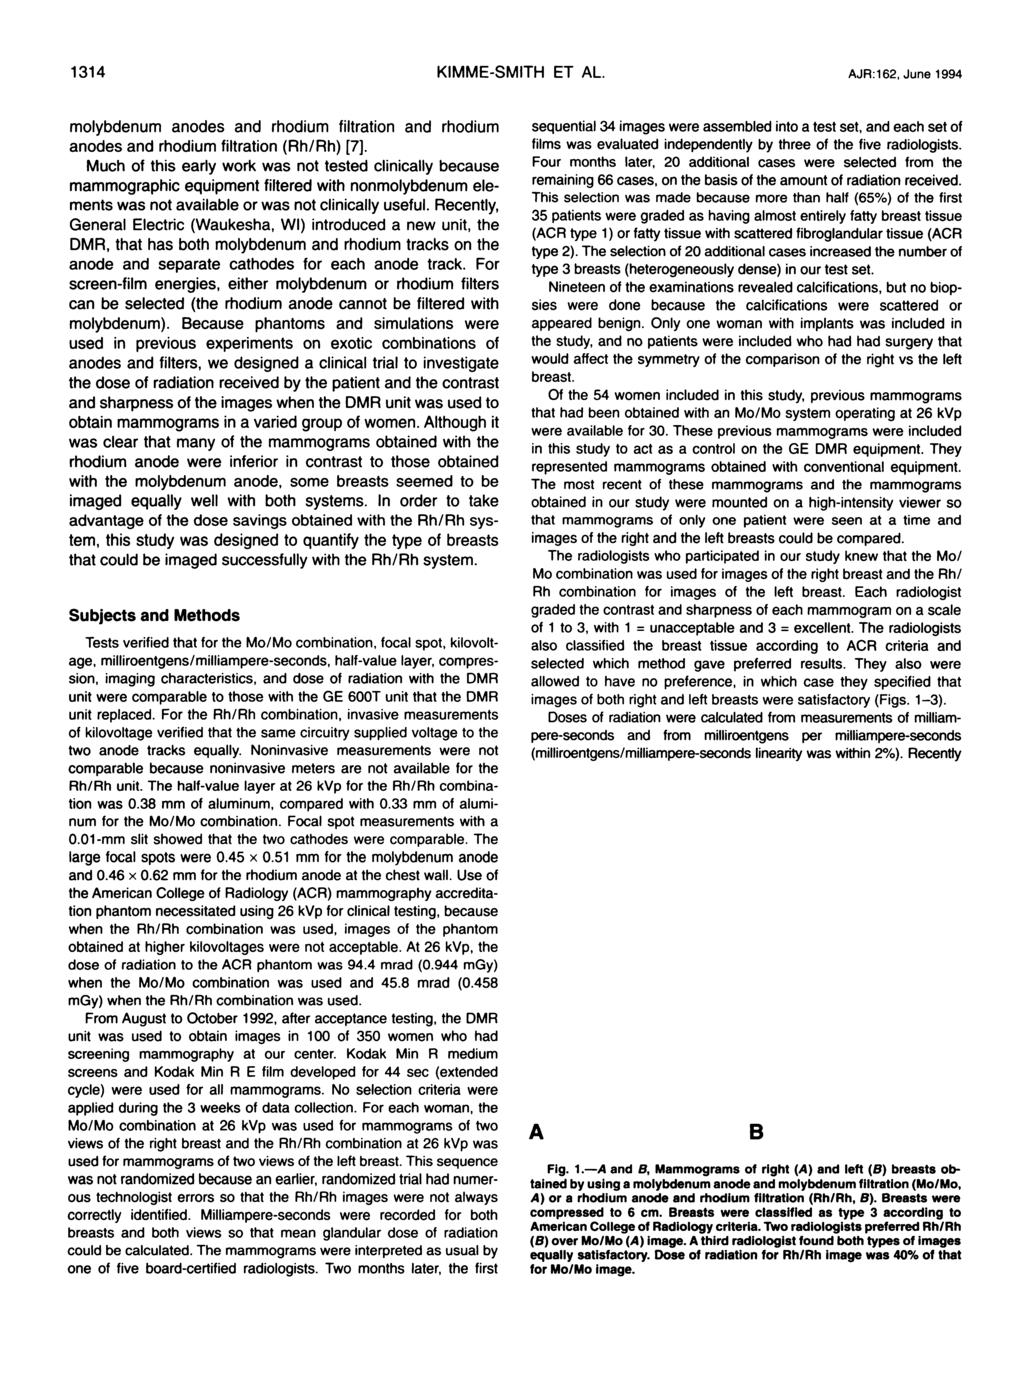 1314 KIMME-SMITH ET AL. AJR:162, June 1994 molybdenum anodes and rhodium filtration and rhodium anodes and rhodium filtration (Rh/Rh) [7].